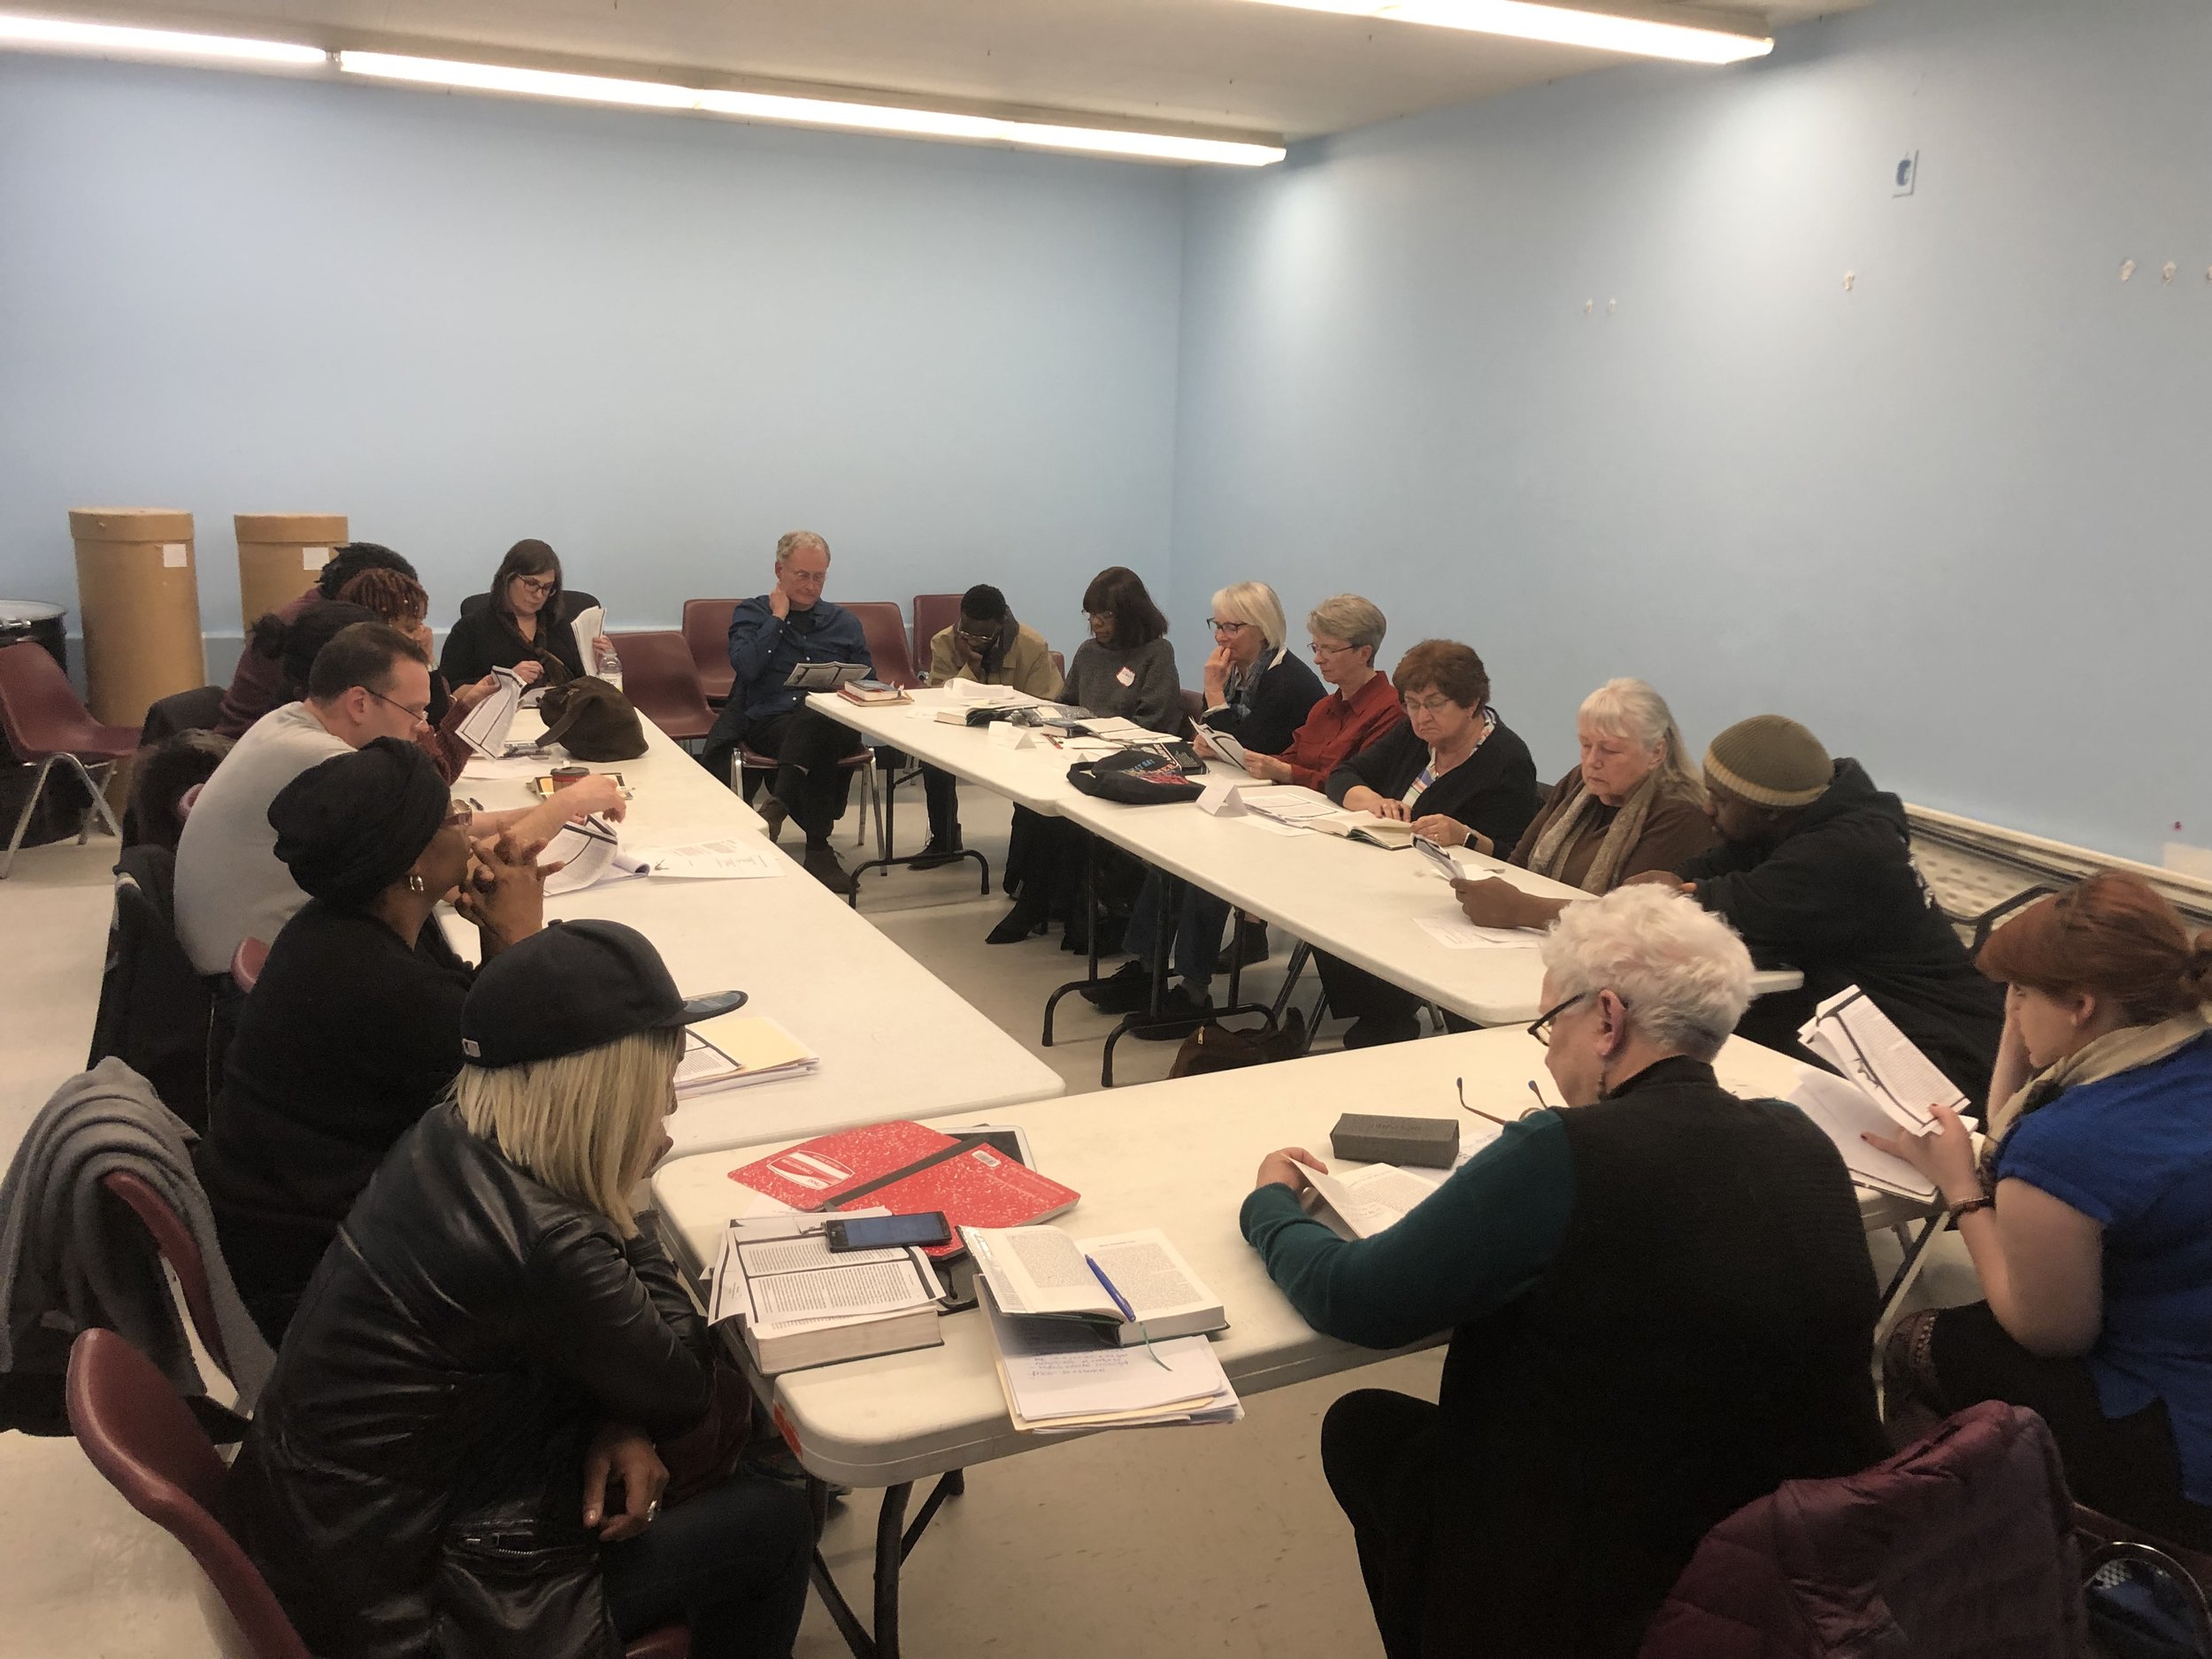 North Buffalo Community Center - March 26, 2019